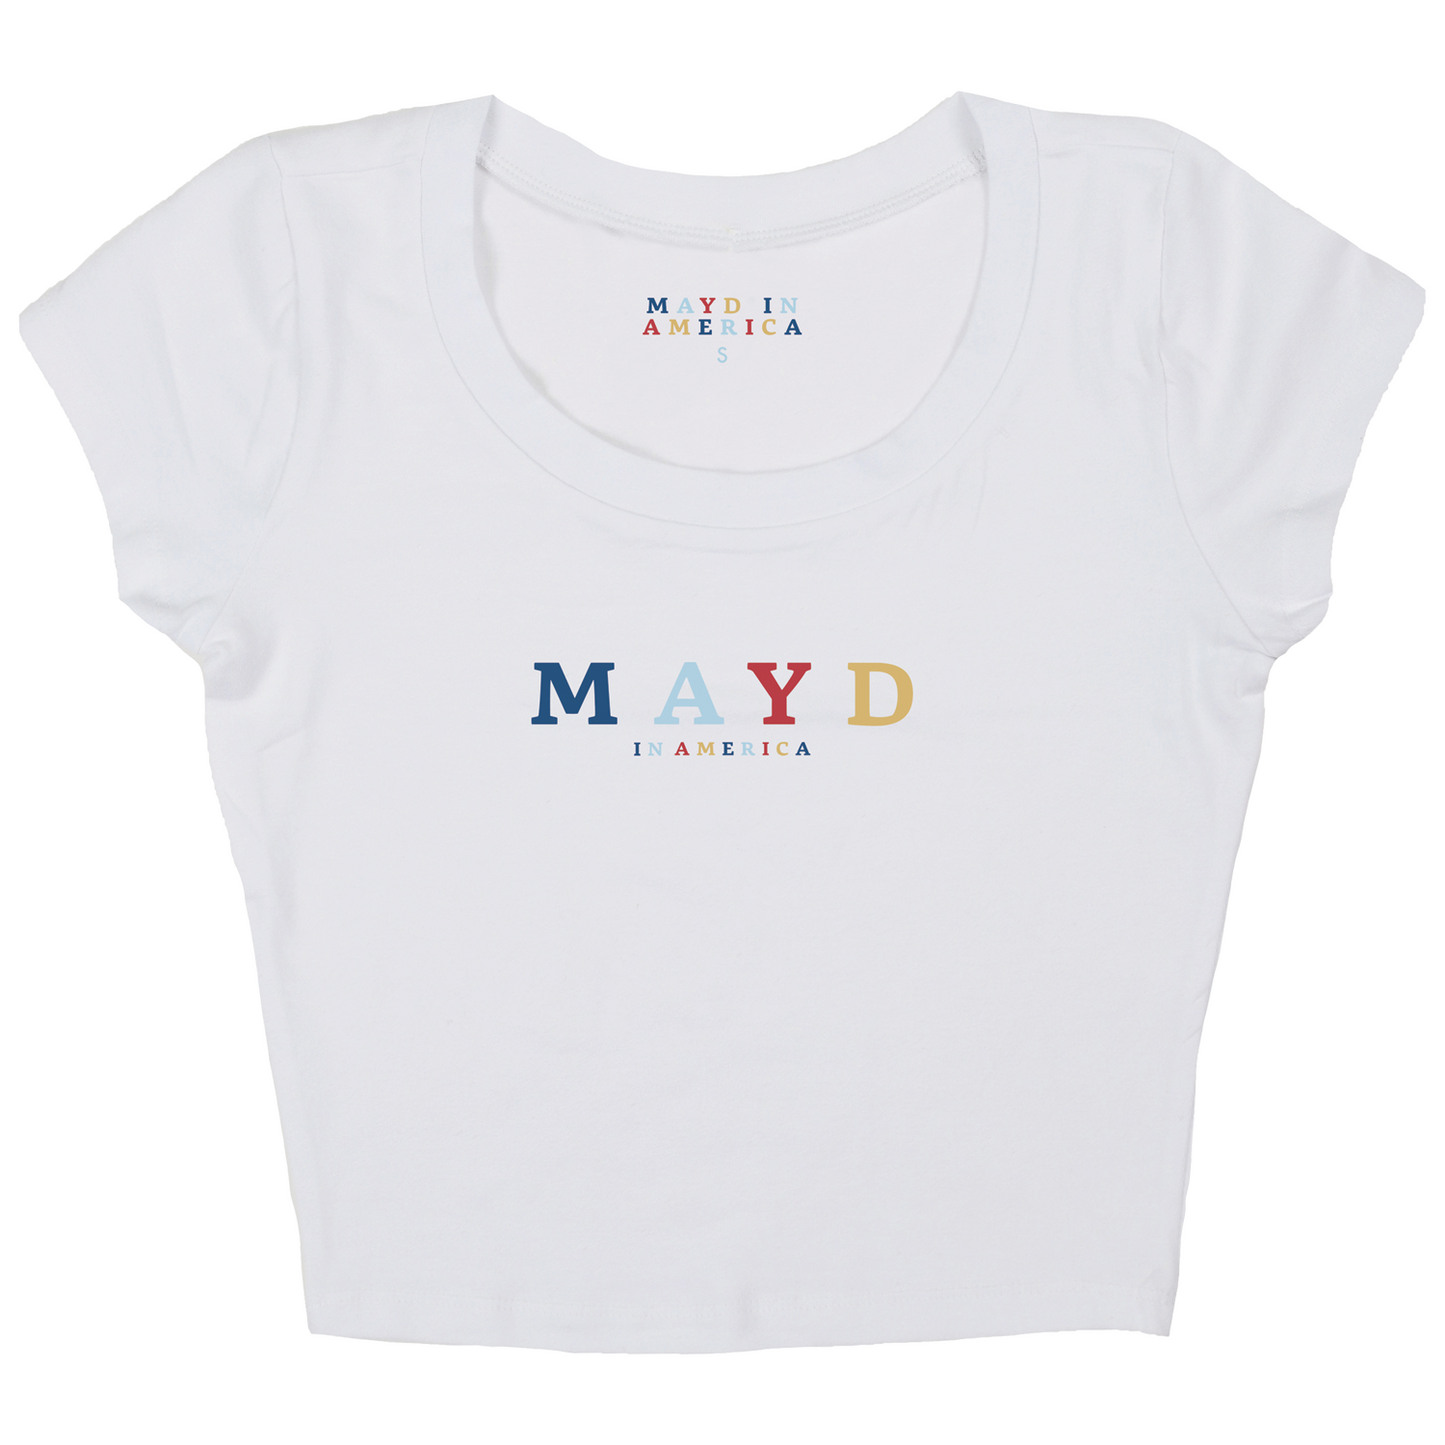 MAYD in America Crop Top T-shirt